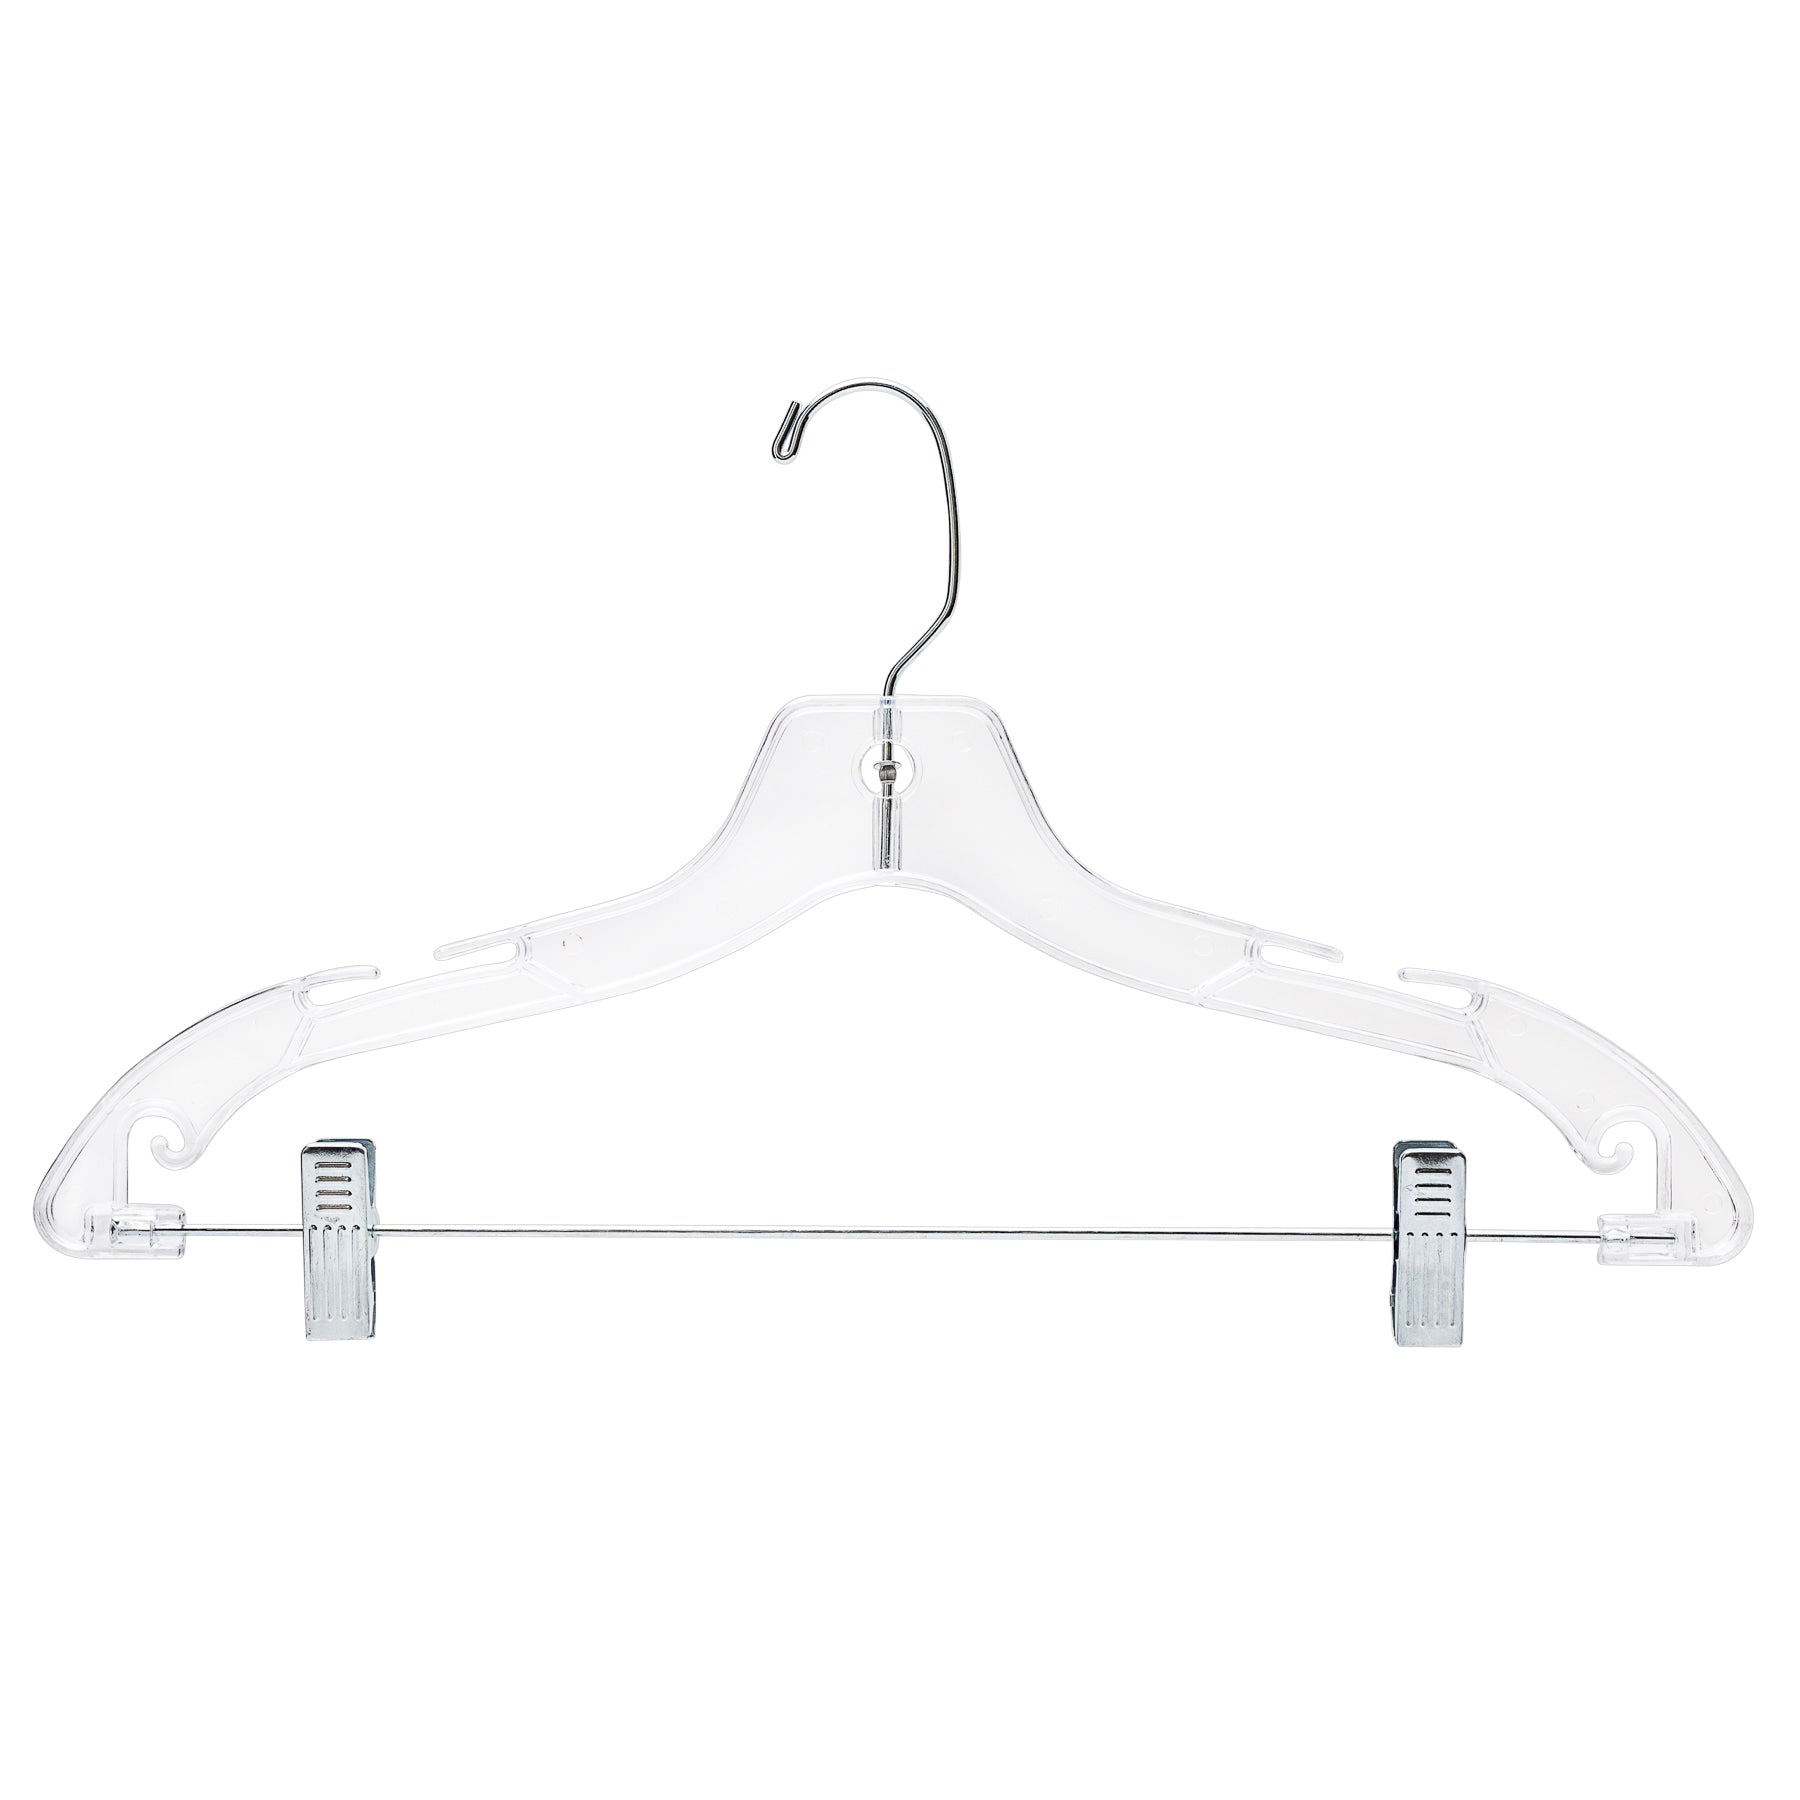 43cm Clear Plastic Combination Hanger with Clips (100% transparent) Sold in Bundles of 25/50/100 - Rackshop Australia